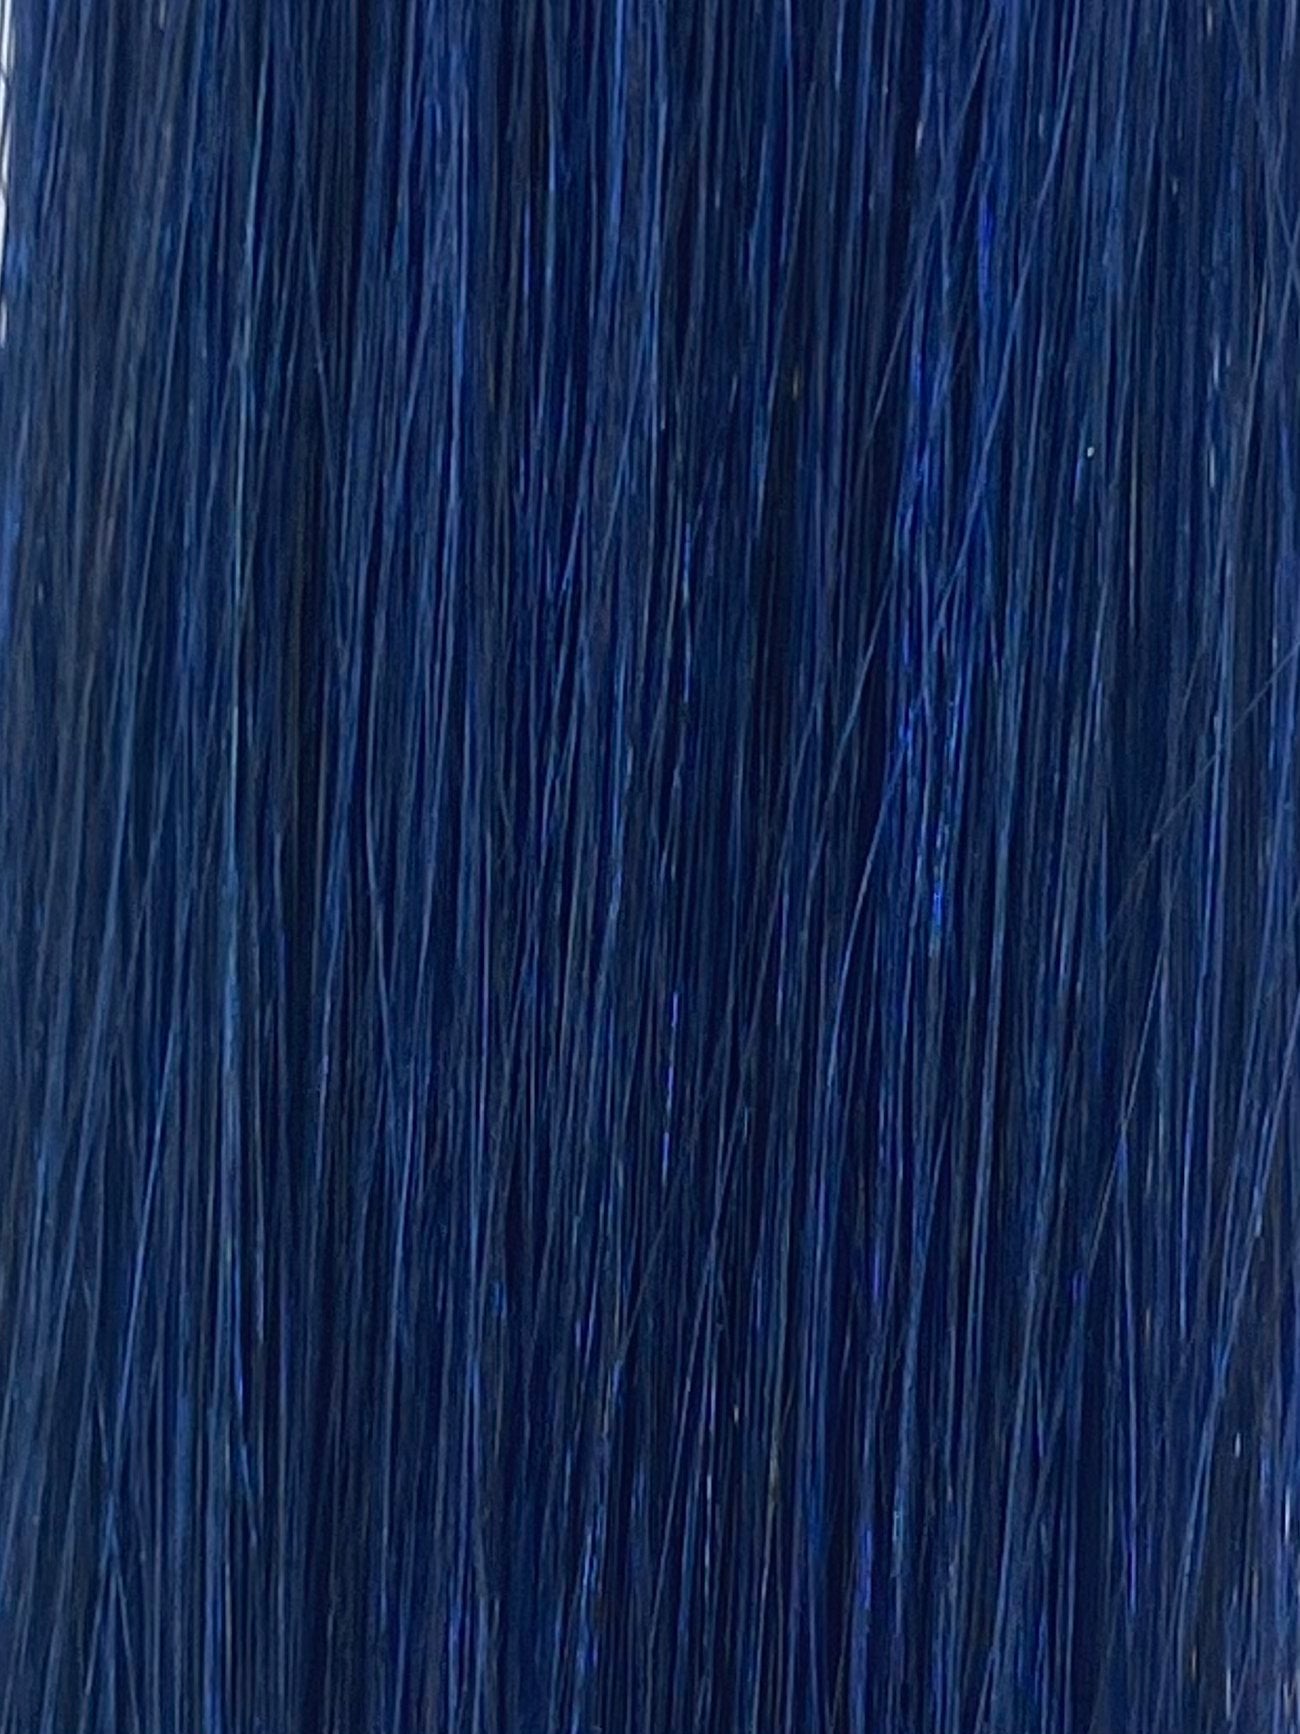 FANTASY FUSION BLUE 50CM/ 20 INCHES  -  10 GRAMS - Image 1